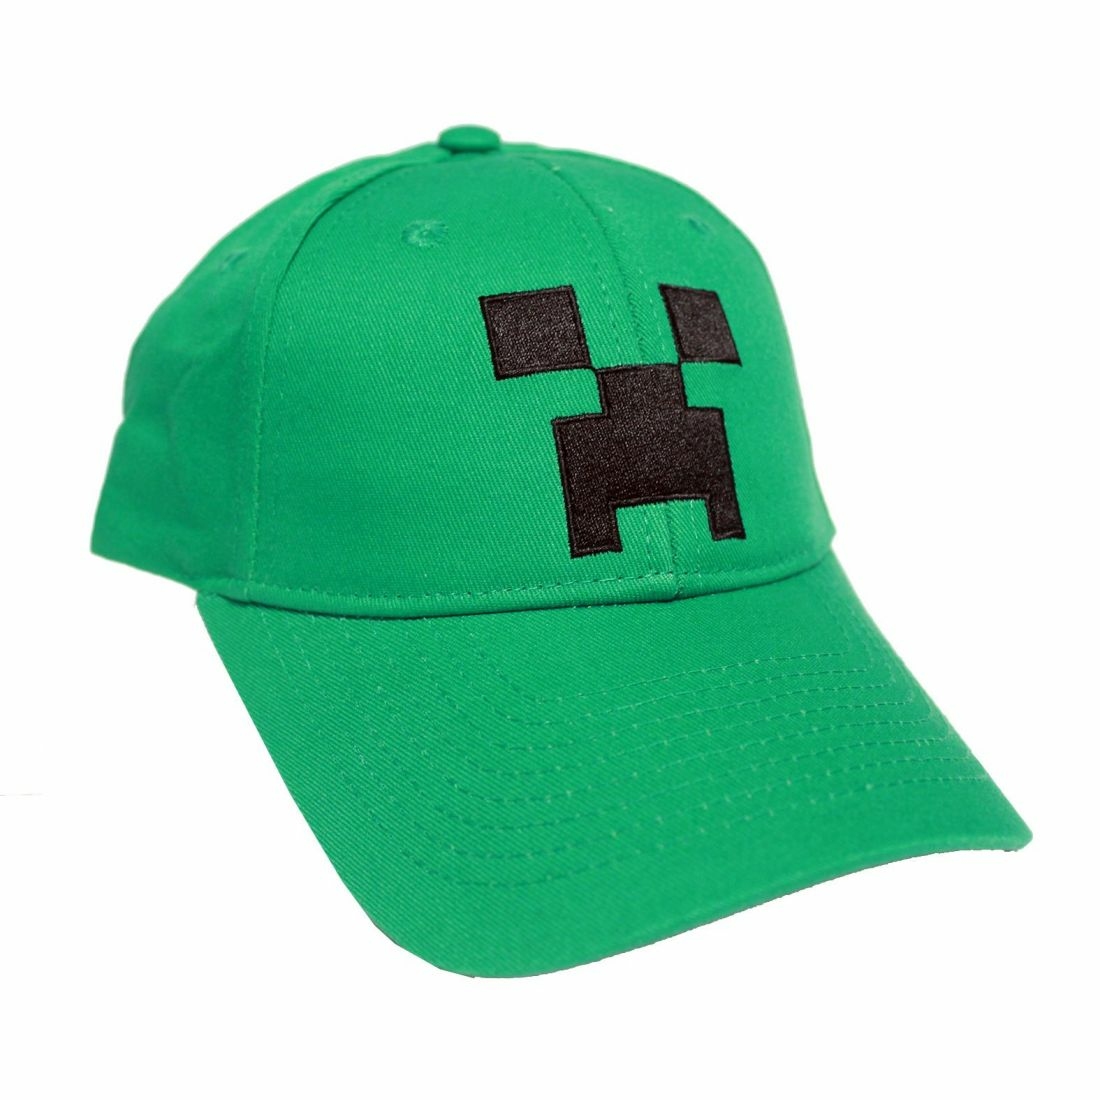 Minecraft hats. Снэпбэк КРИПЕР. Шляпа КРИПЕРА. Кепка КРИПЕР. Шляпа майнкрафт.